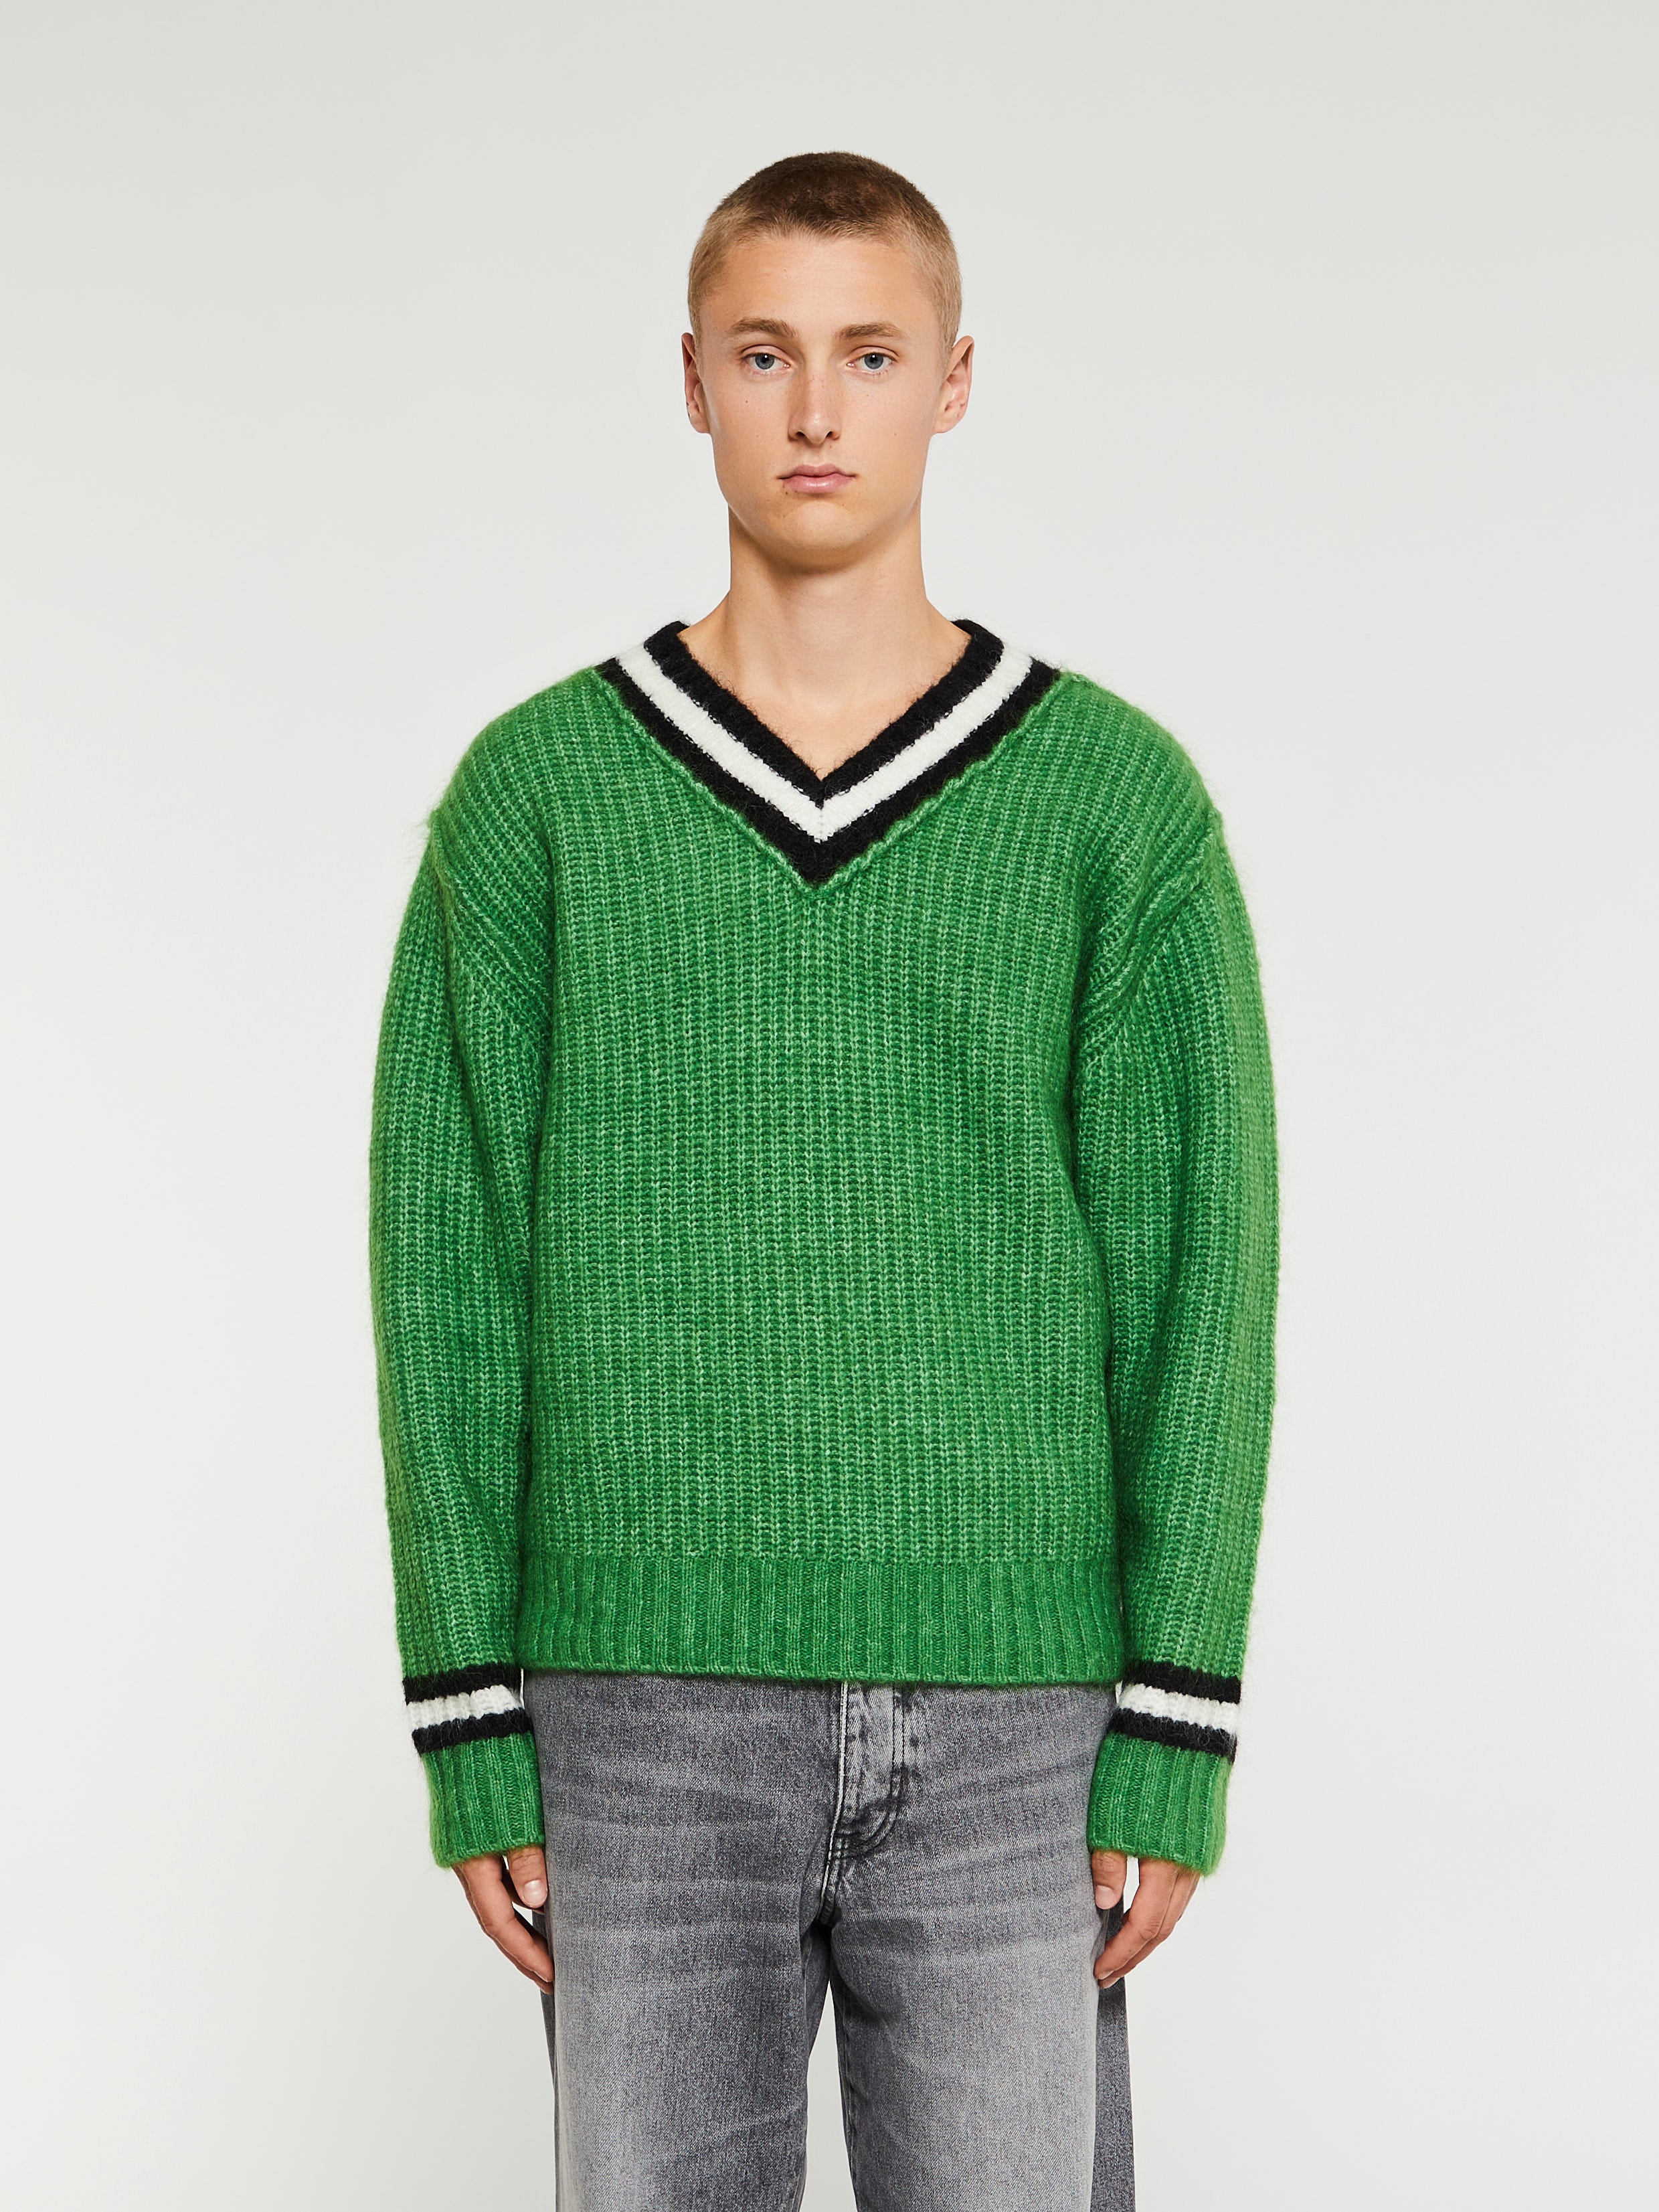 Mohair Tennis Sweater in Green